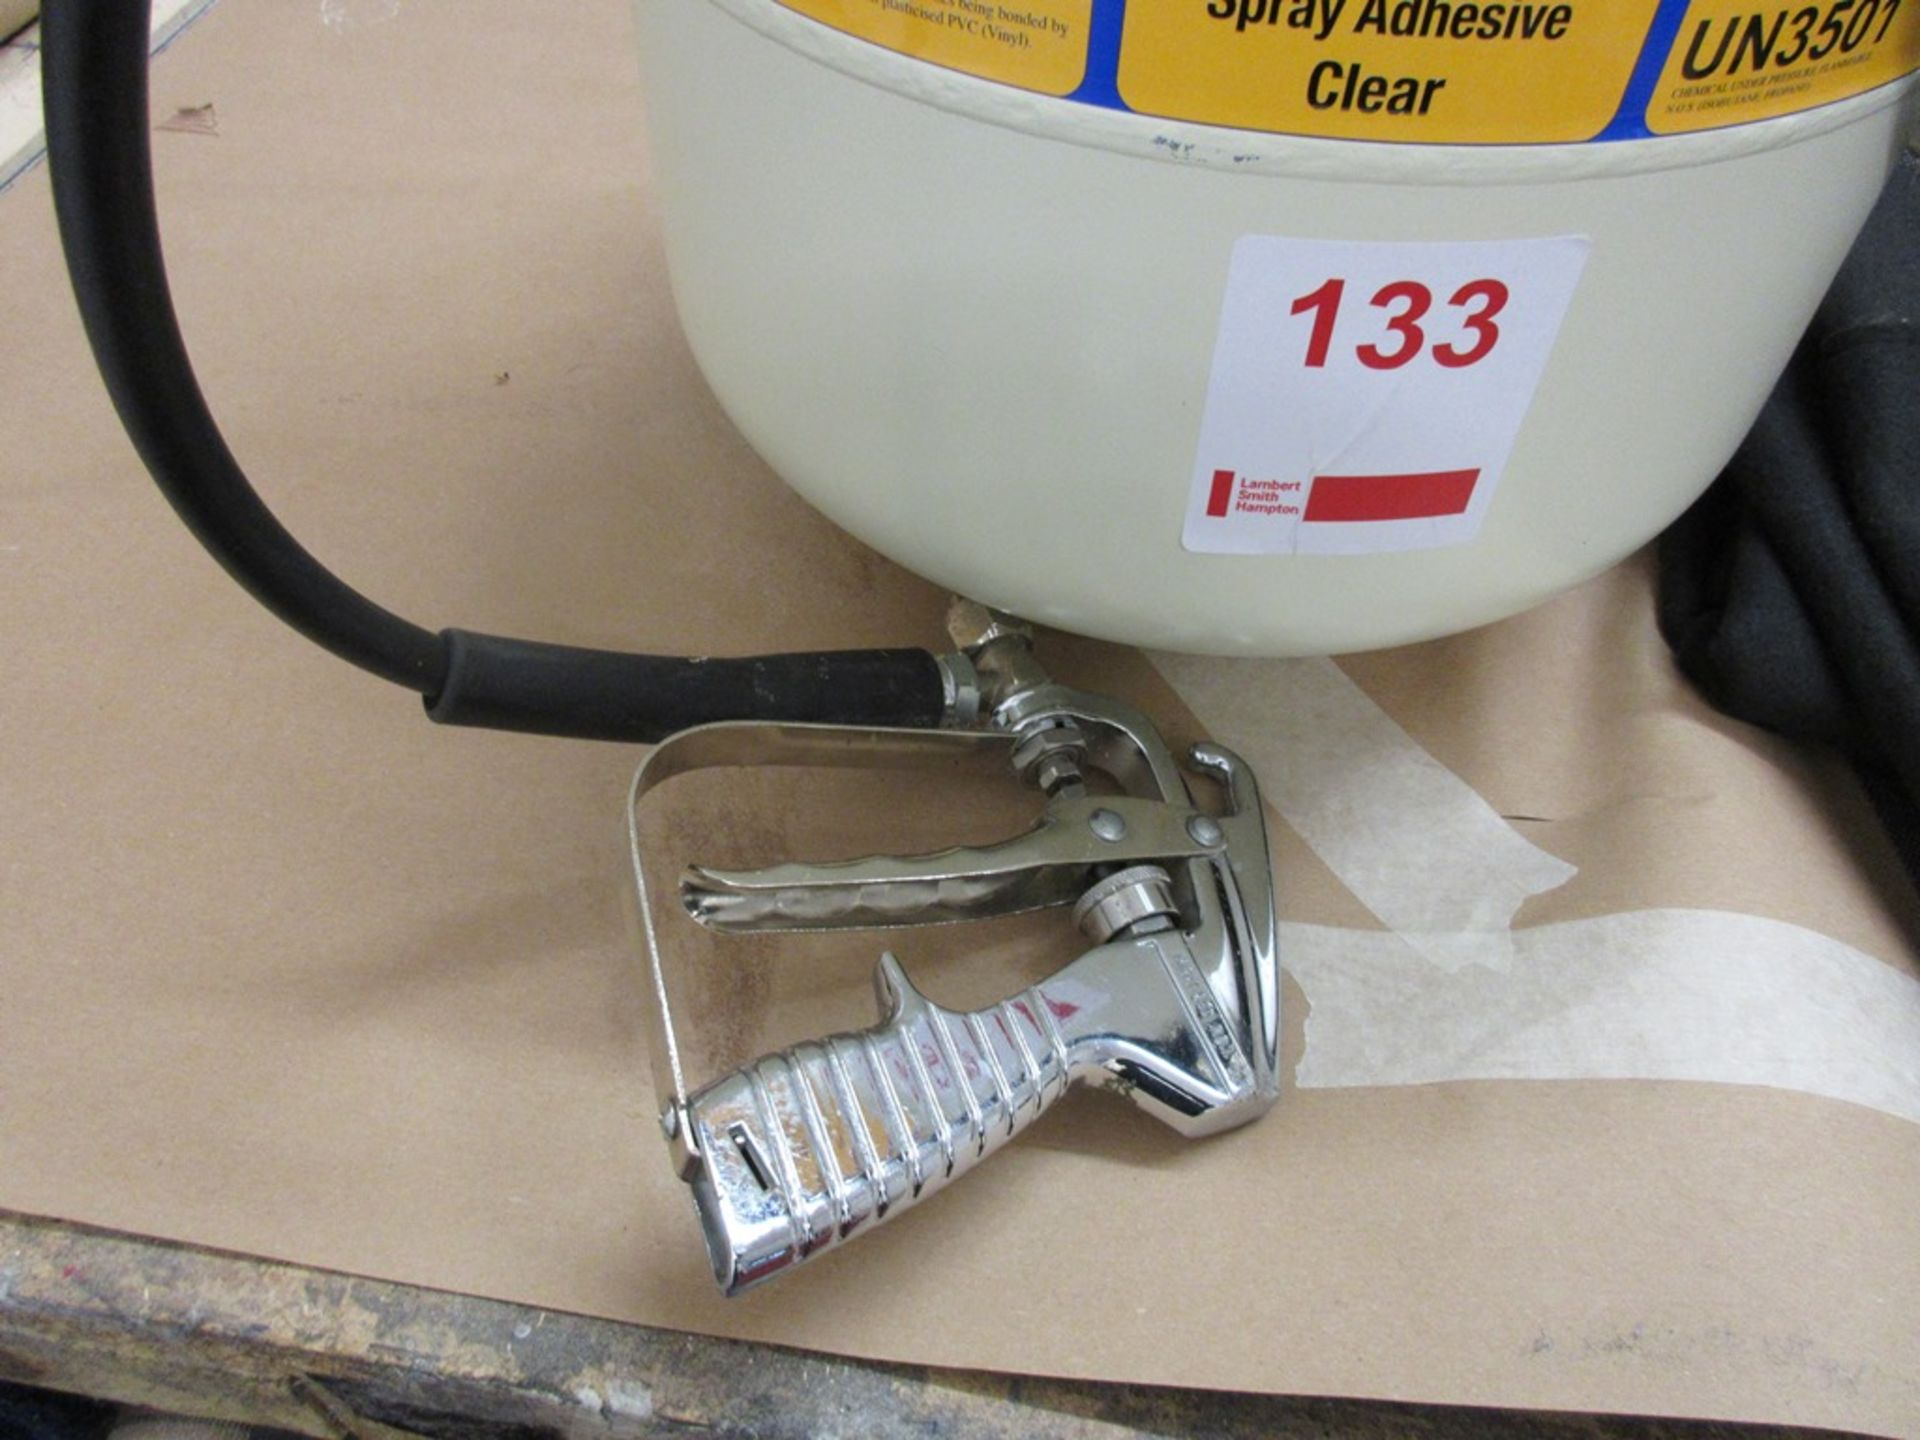 Unbadged glue applicator gun - Image 2 of 3